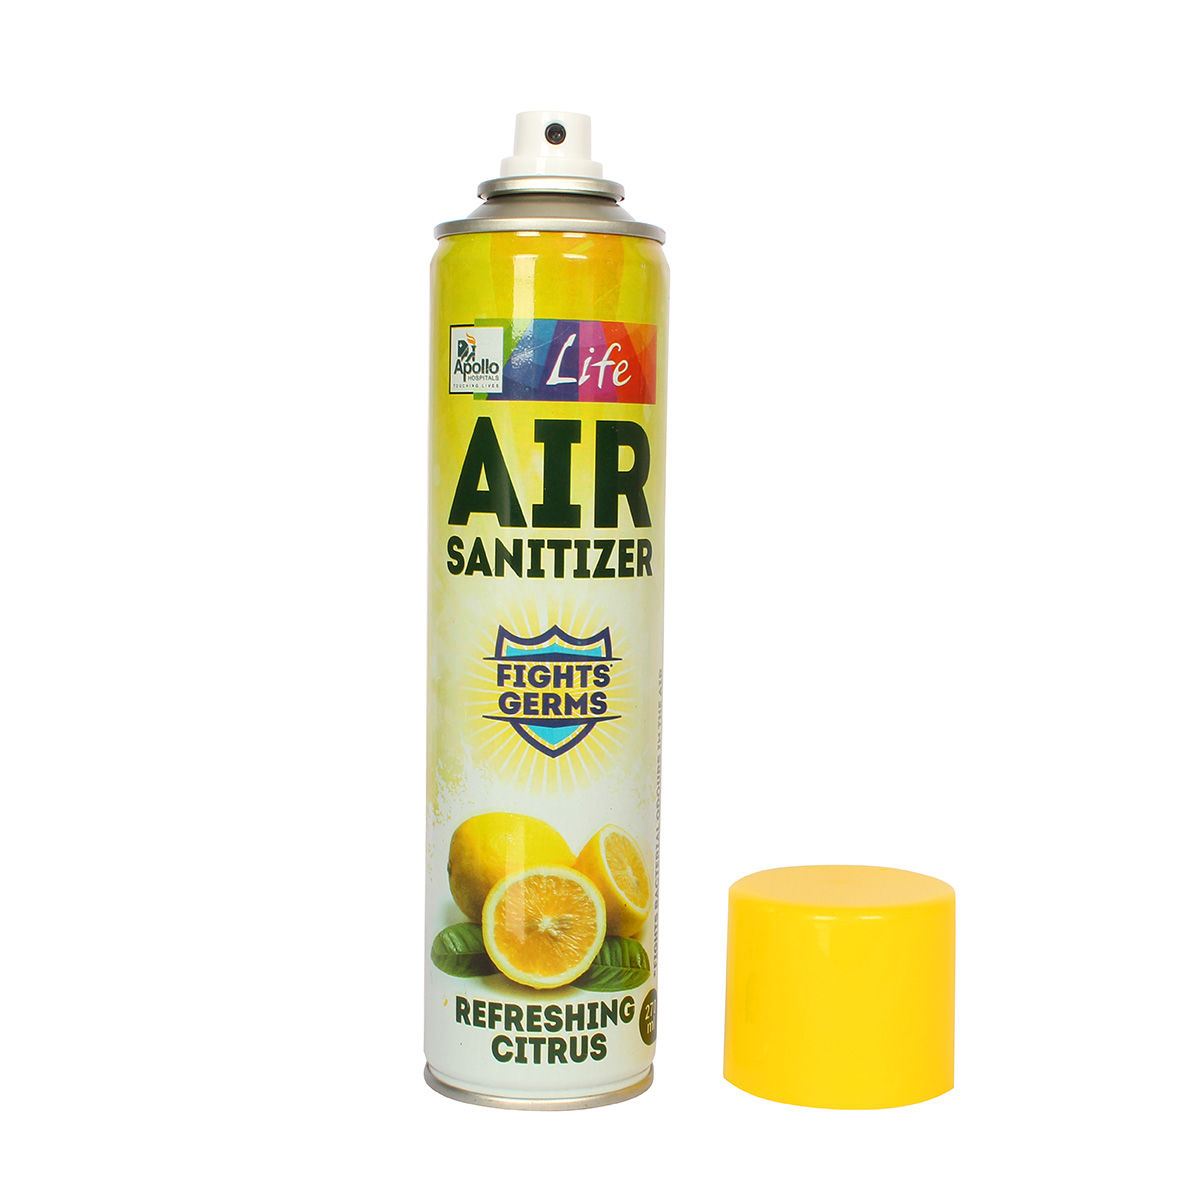 Apollo Life Air Sanitizer, 270 ml, Pack of 1 